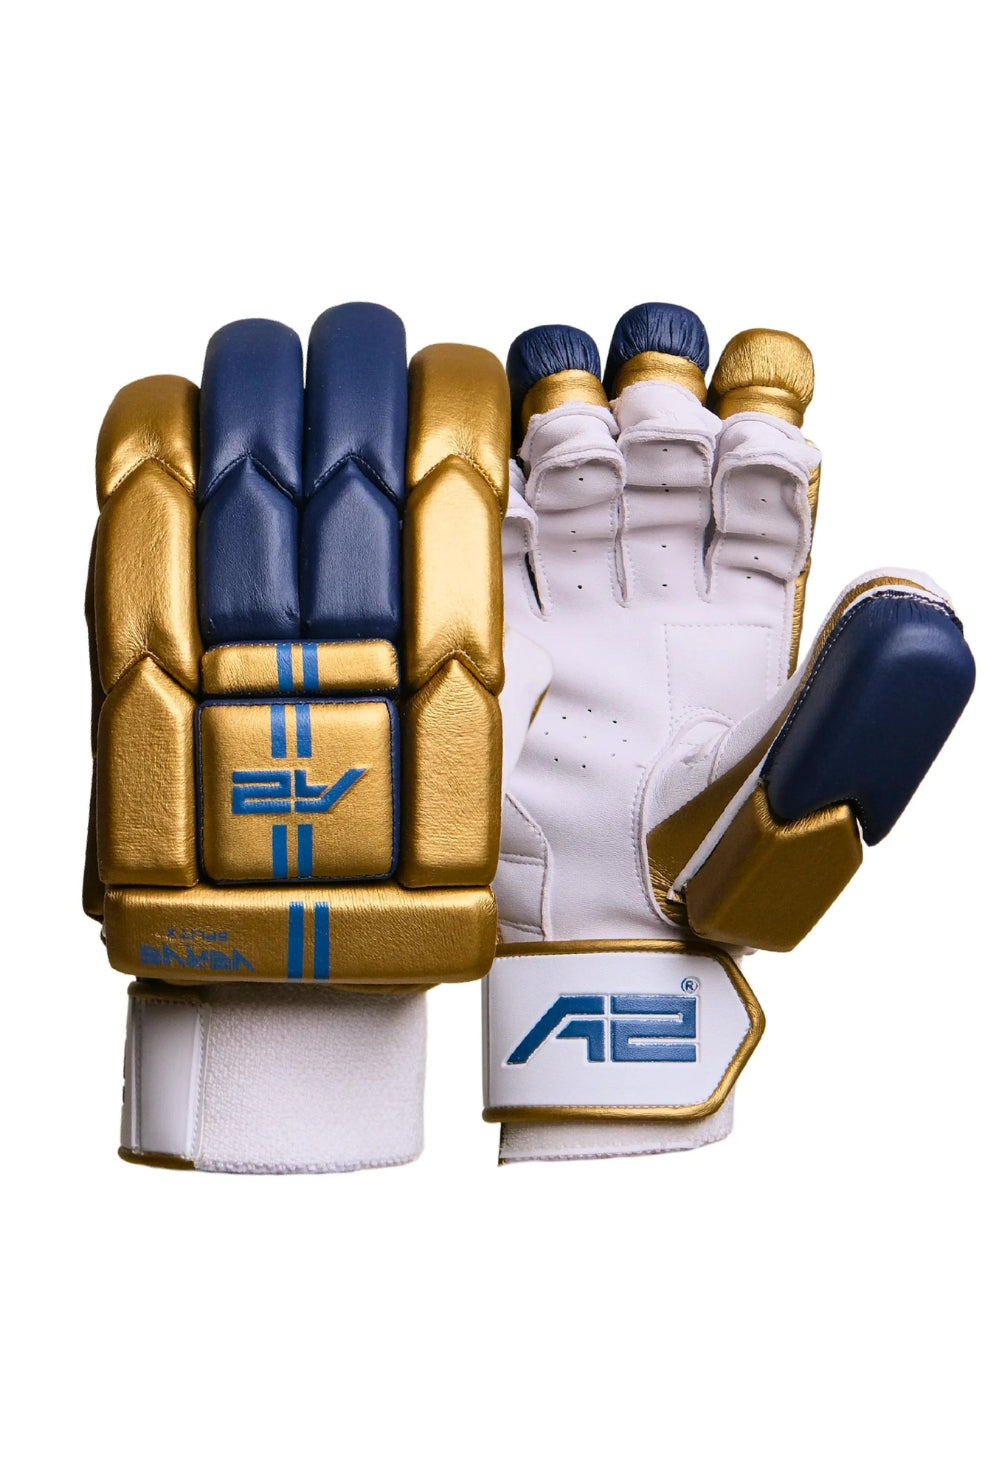 Cricket Batting Gloves - SplitX - Gold & Dark Blue